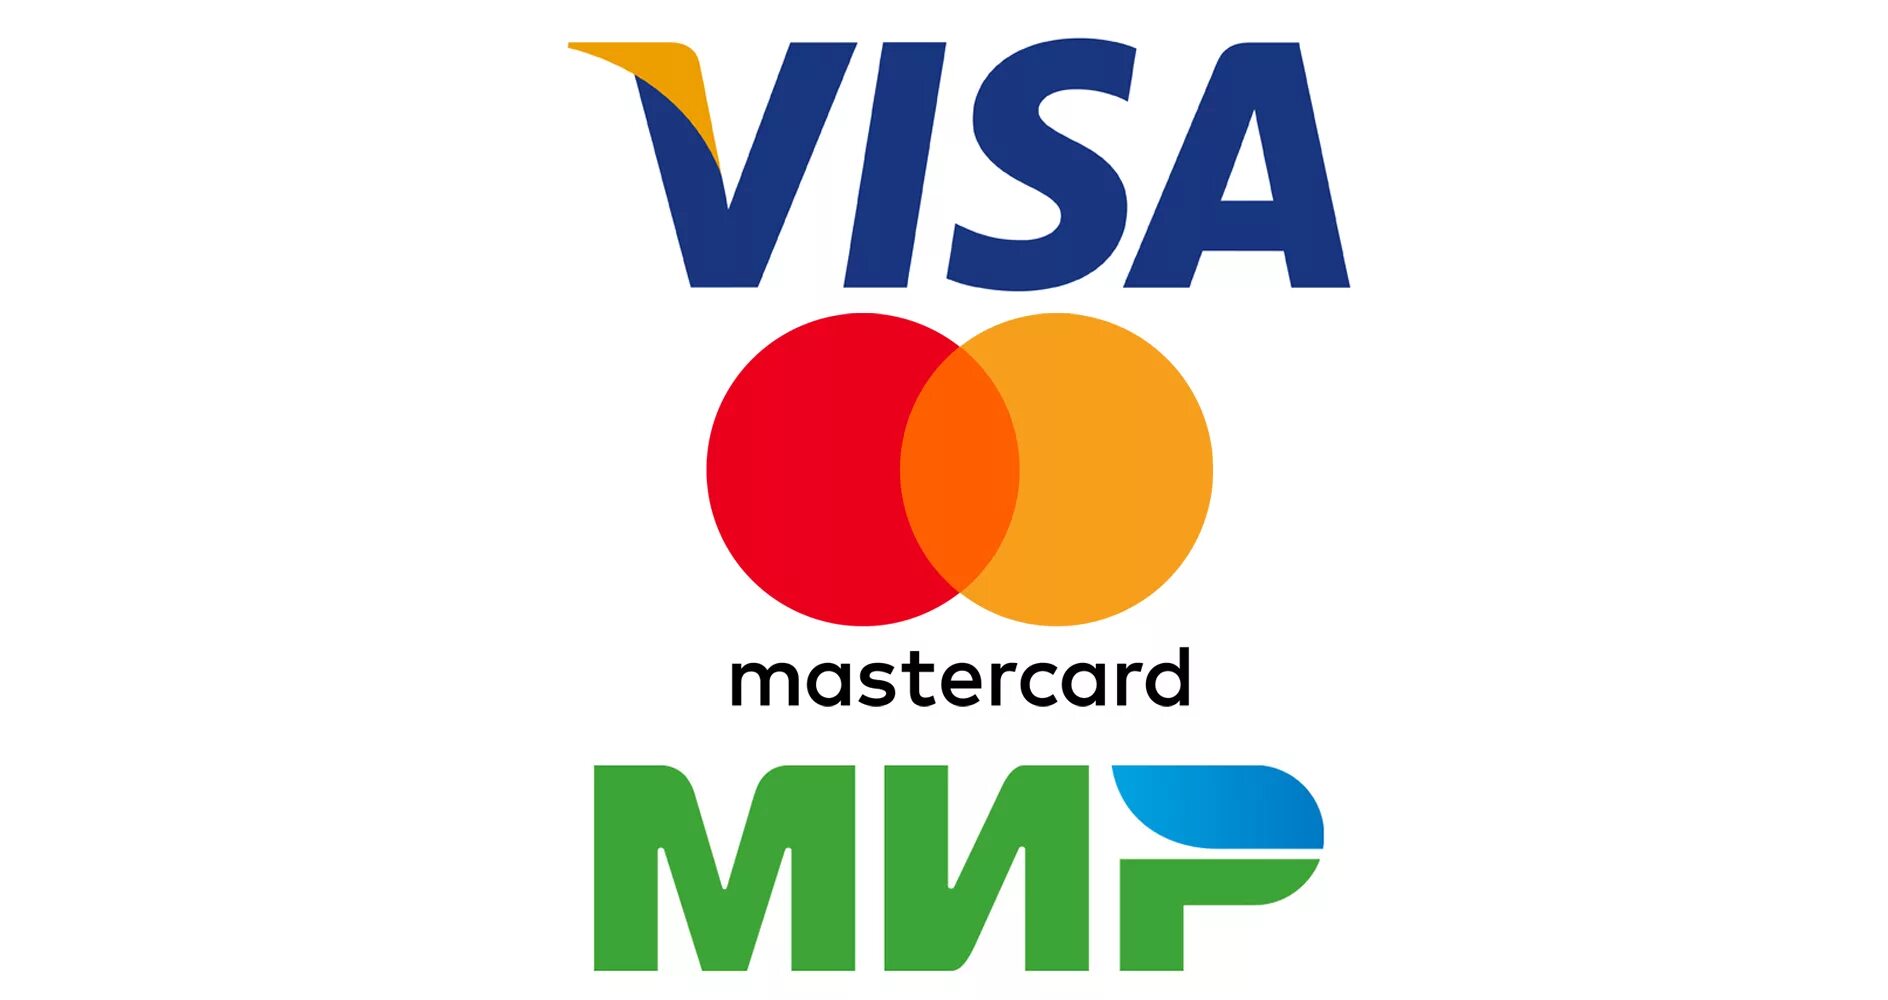 Оплачивай картой visa. Visa MASTERCARD мир. Логотип платежной системы visa. Оплата картой visa. Логотип visa MASTERCARD мир.